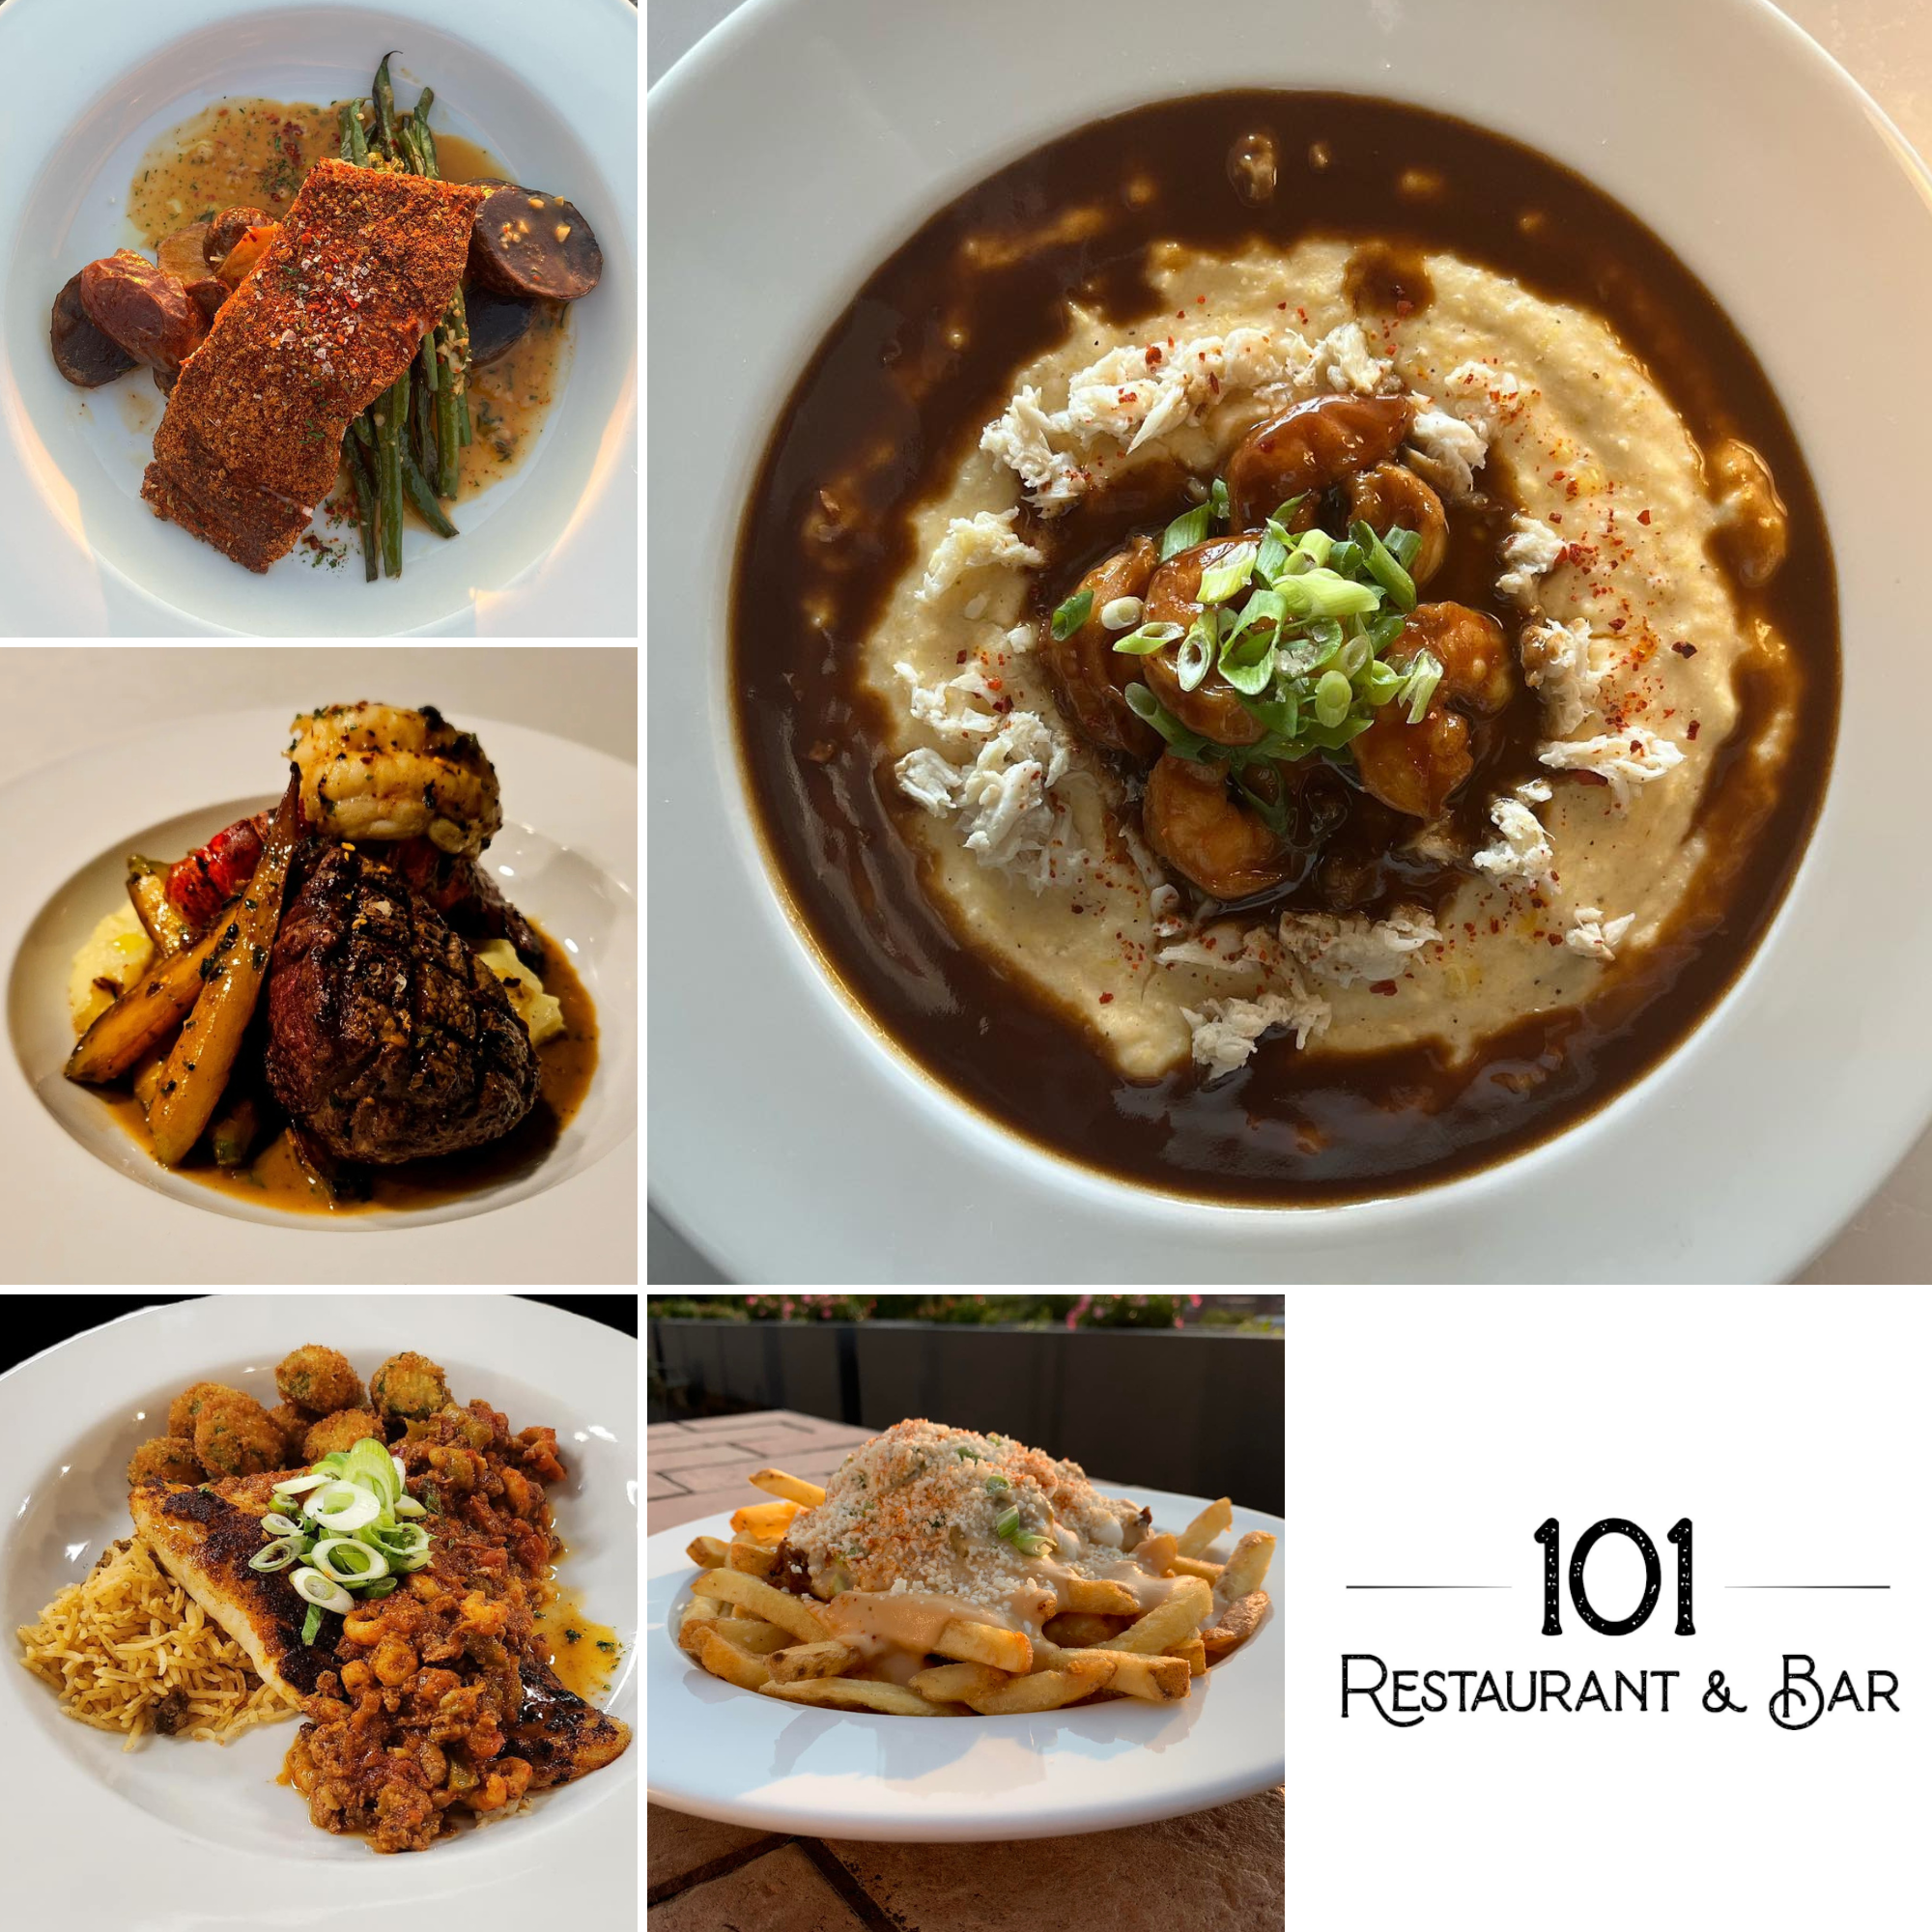 101 Restaurant & Bar